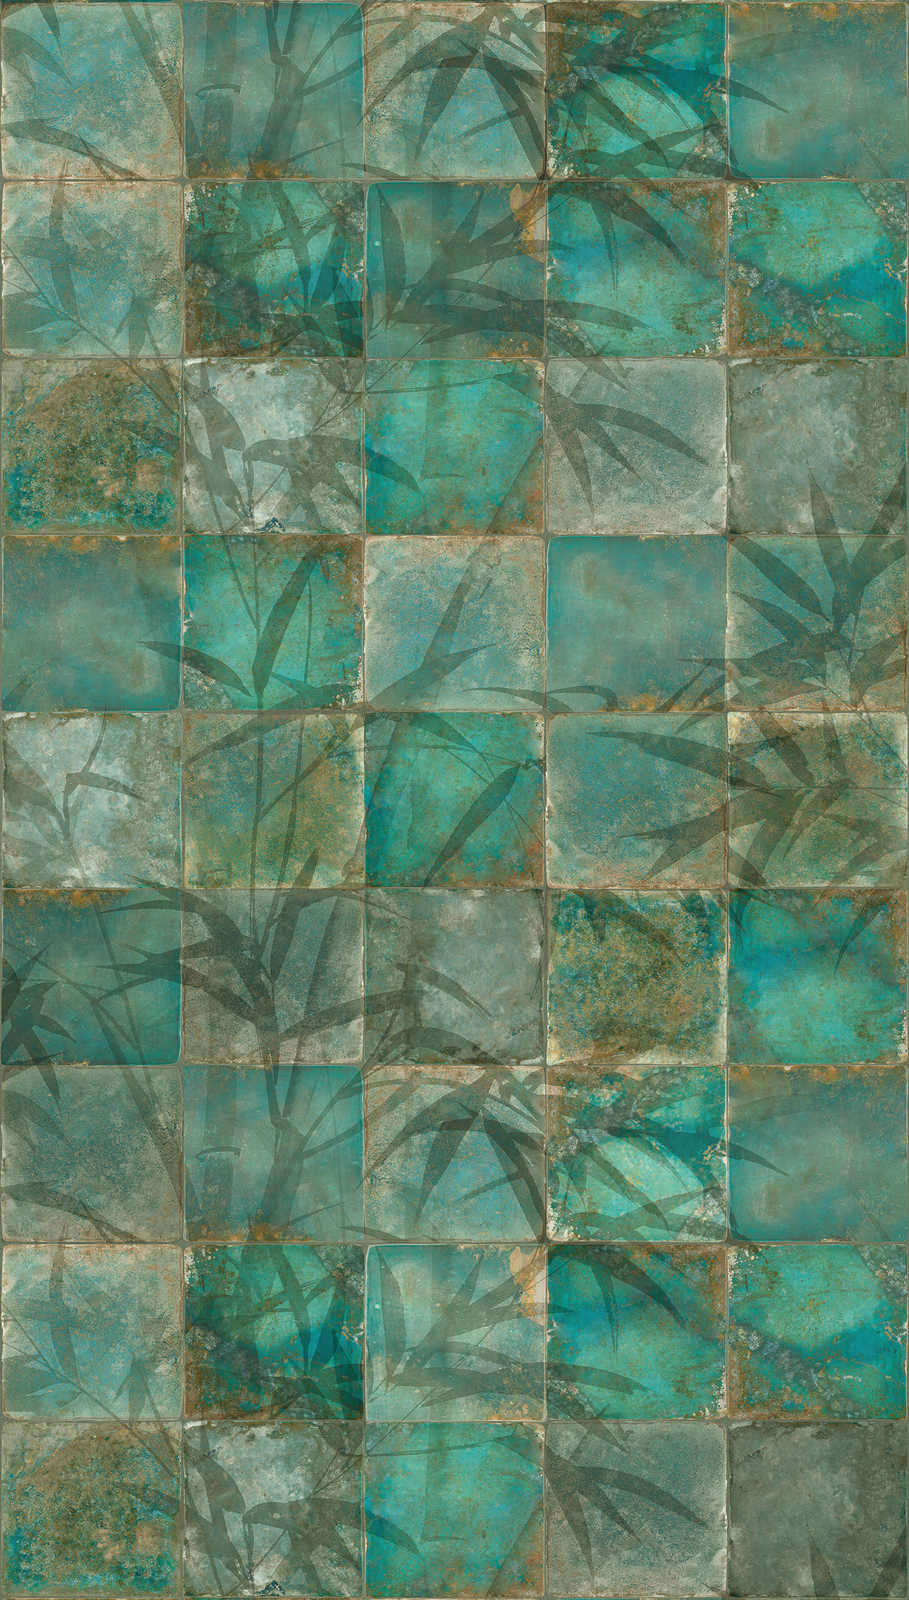             Grüne Vliestapete mit Blatt Mosaikmuster in Fliesenoptik – Grün
        